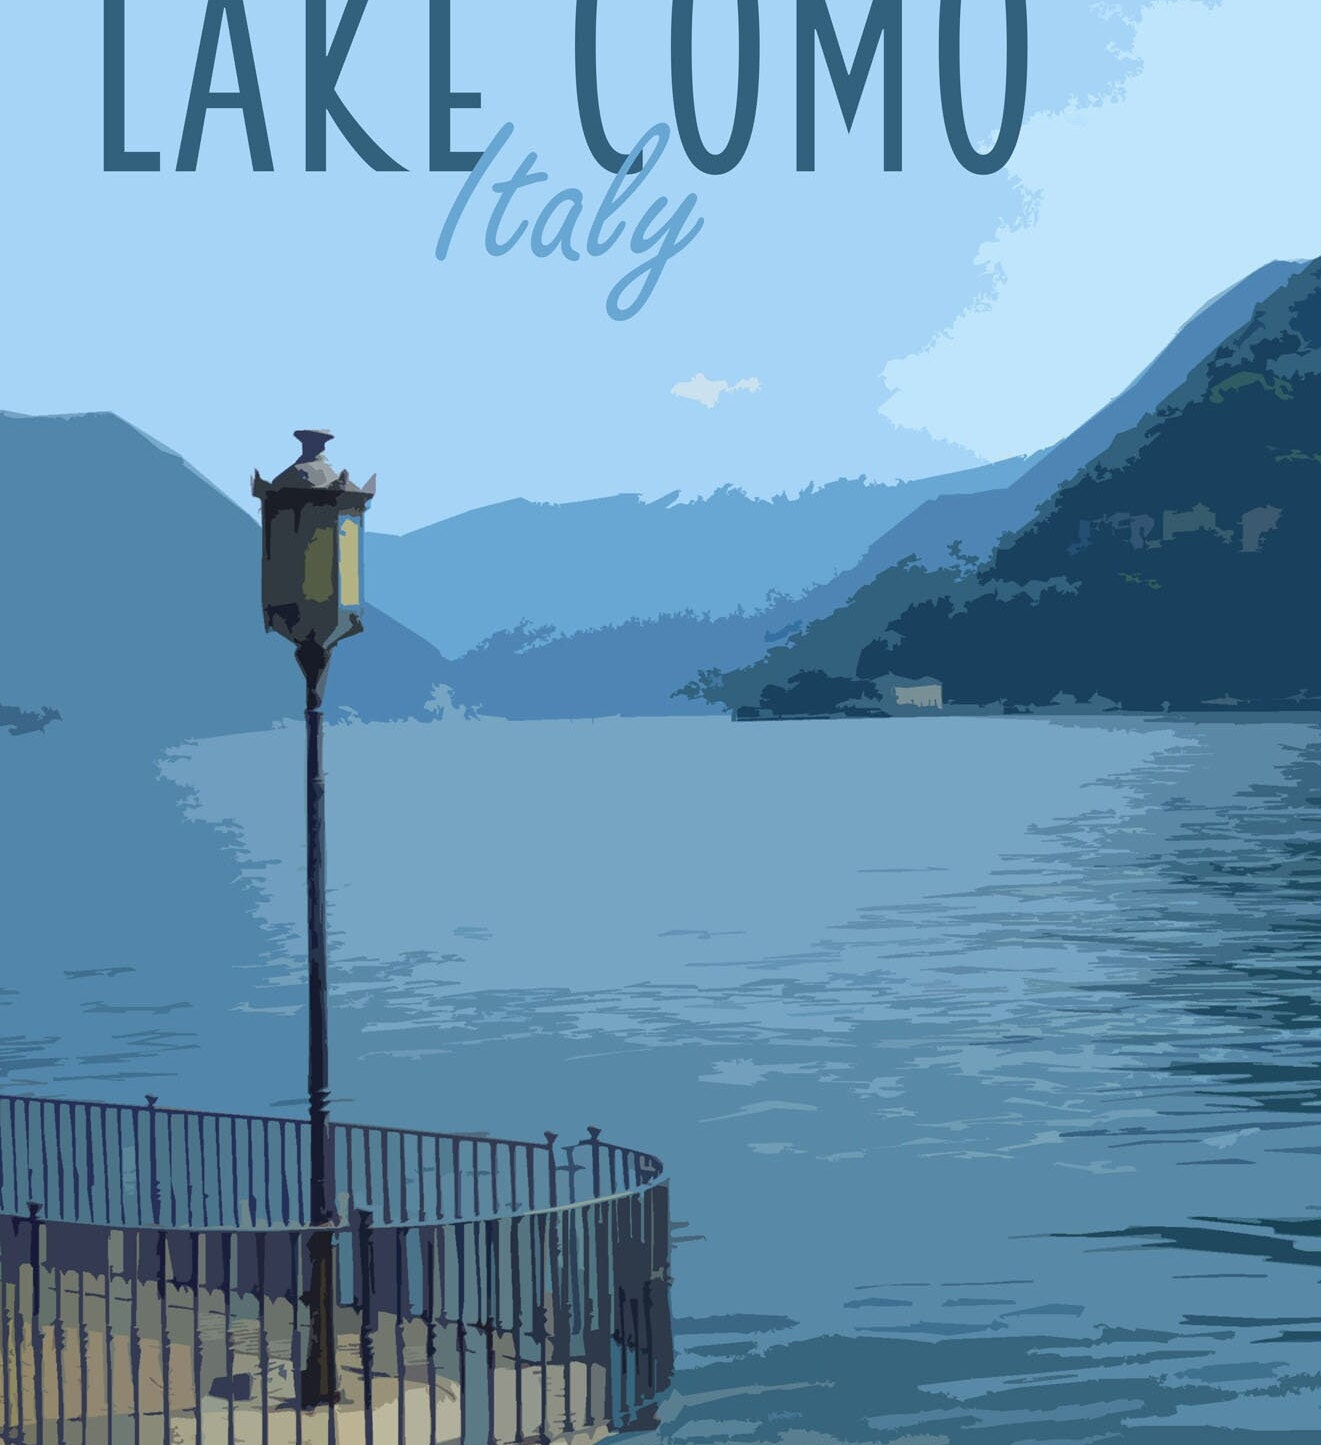 Lake Como Travel Poster